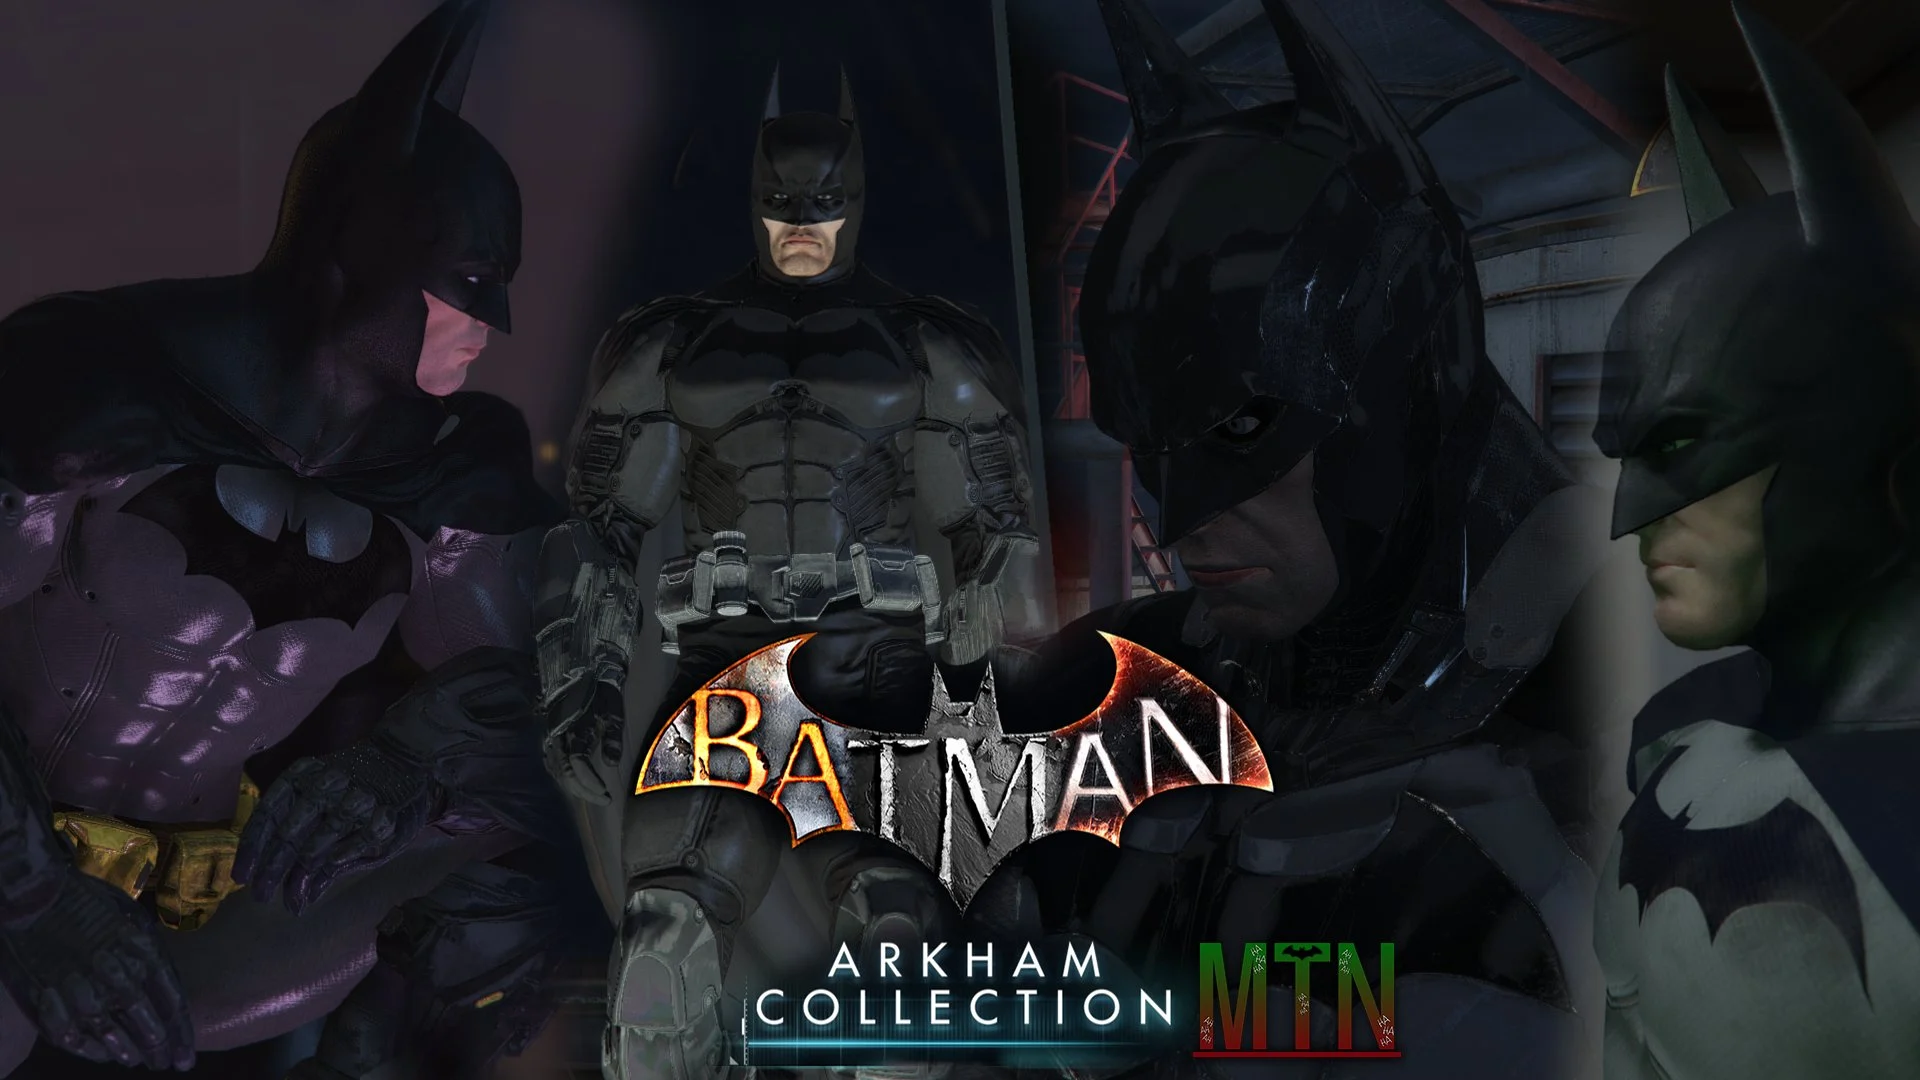 Бэтмен Аркхем коллекшн. Batman Arkham collection бои. Batman: Arkham Origins. Batman Arkham collection (ps4).